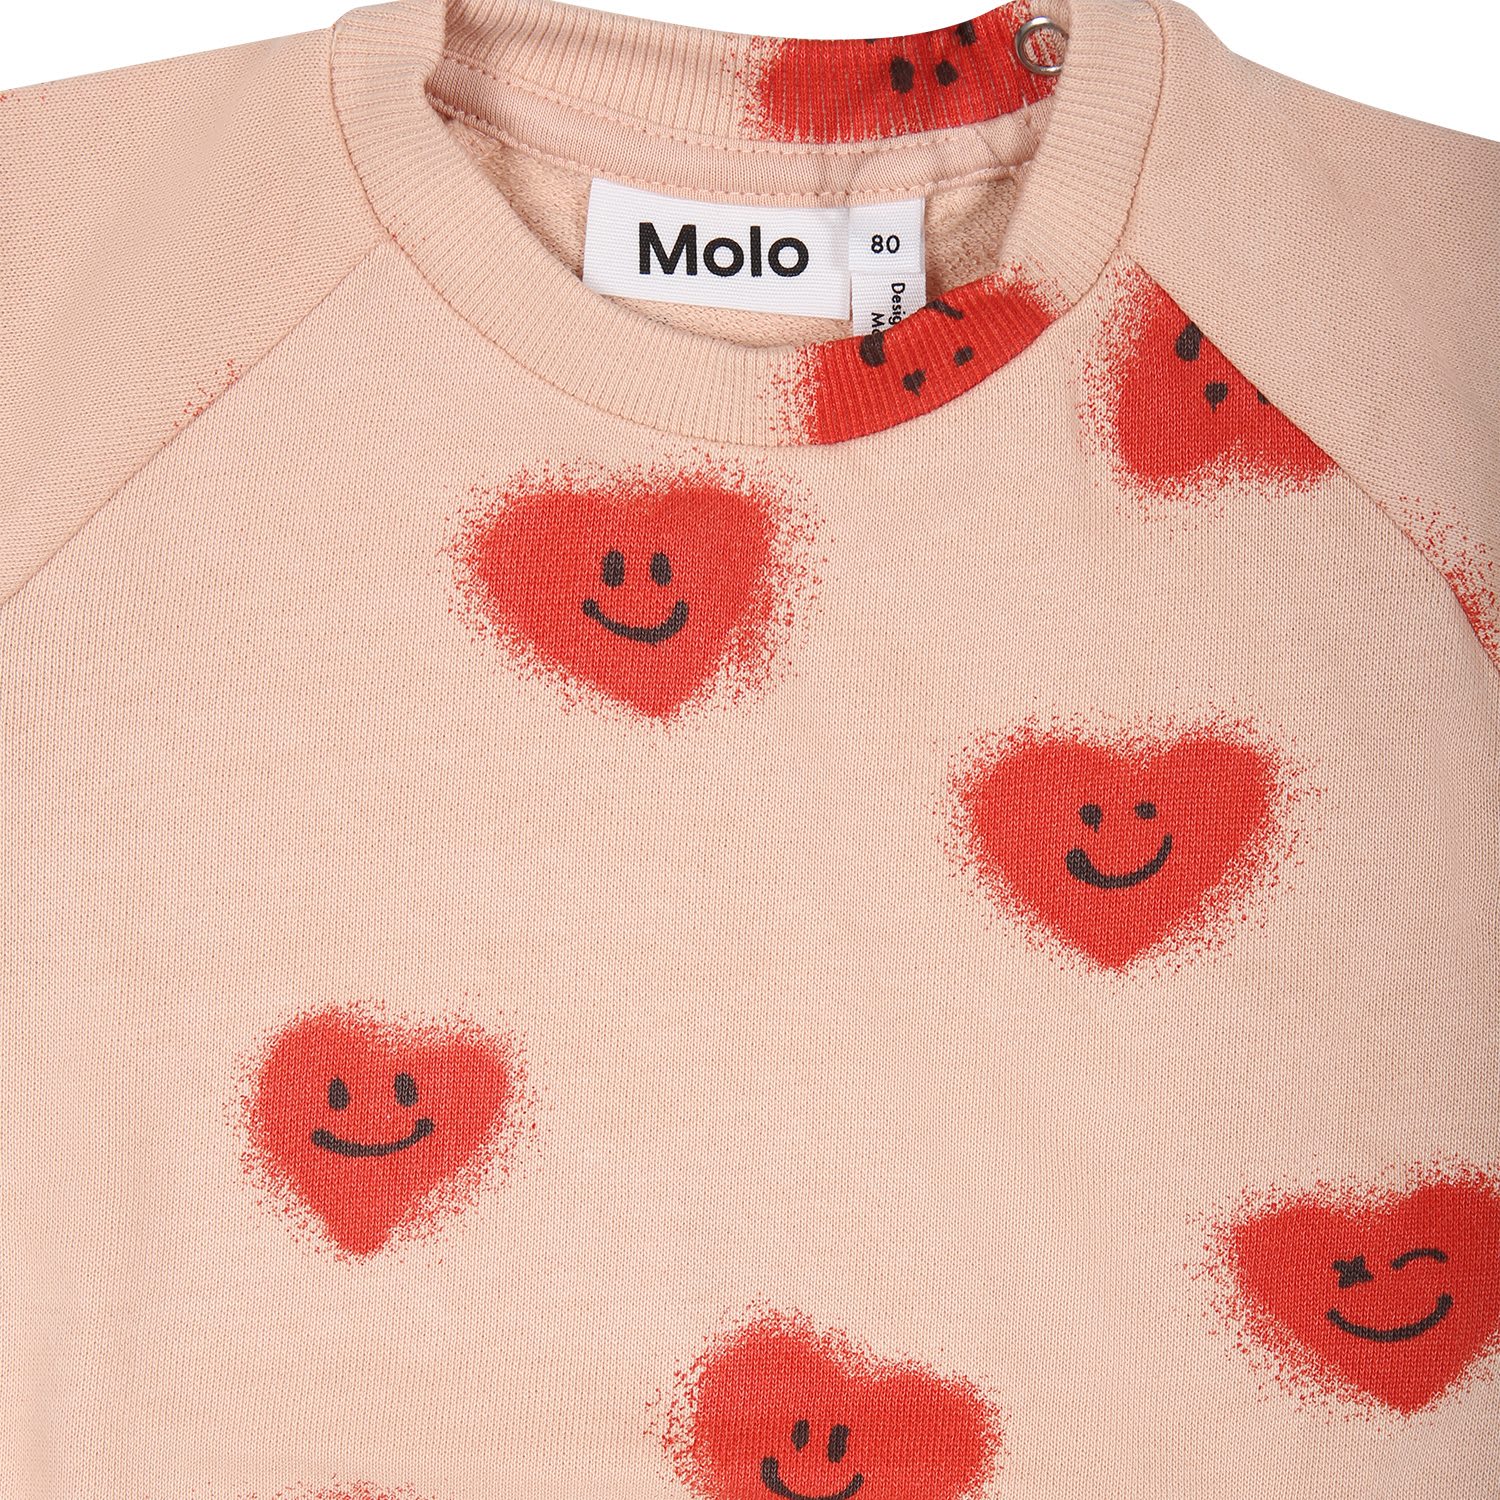 Shop Molo Pink Sweatshirt For Baby Girl With Smiley